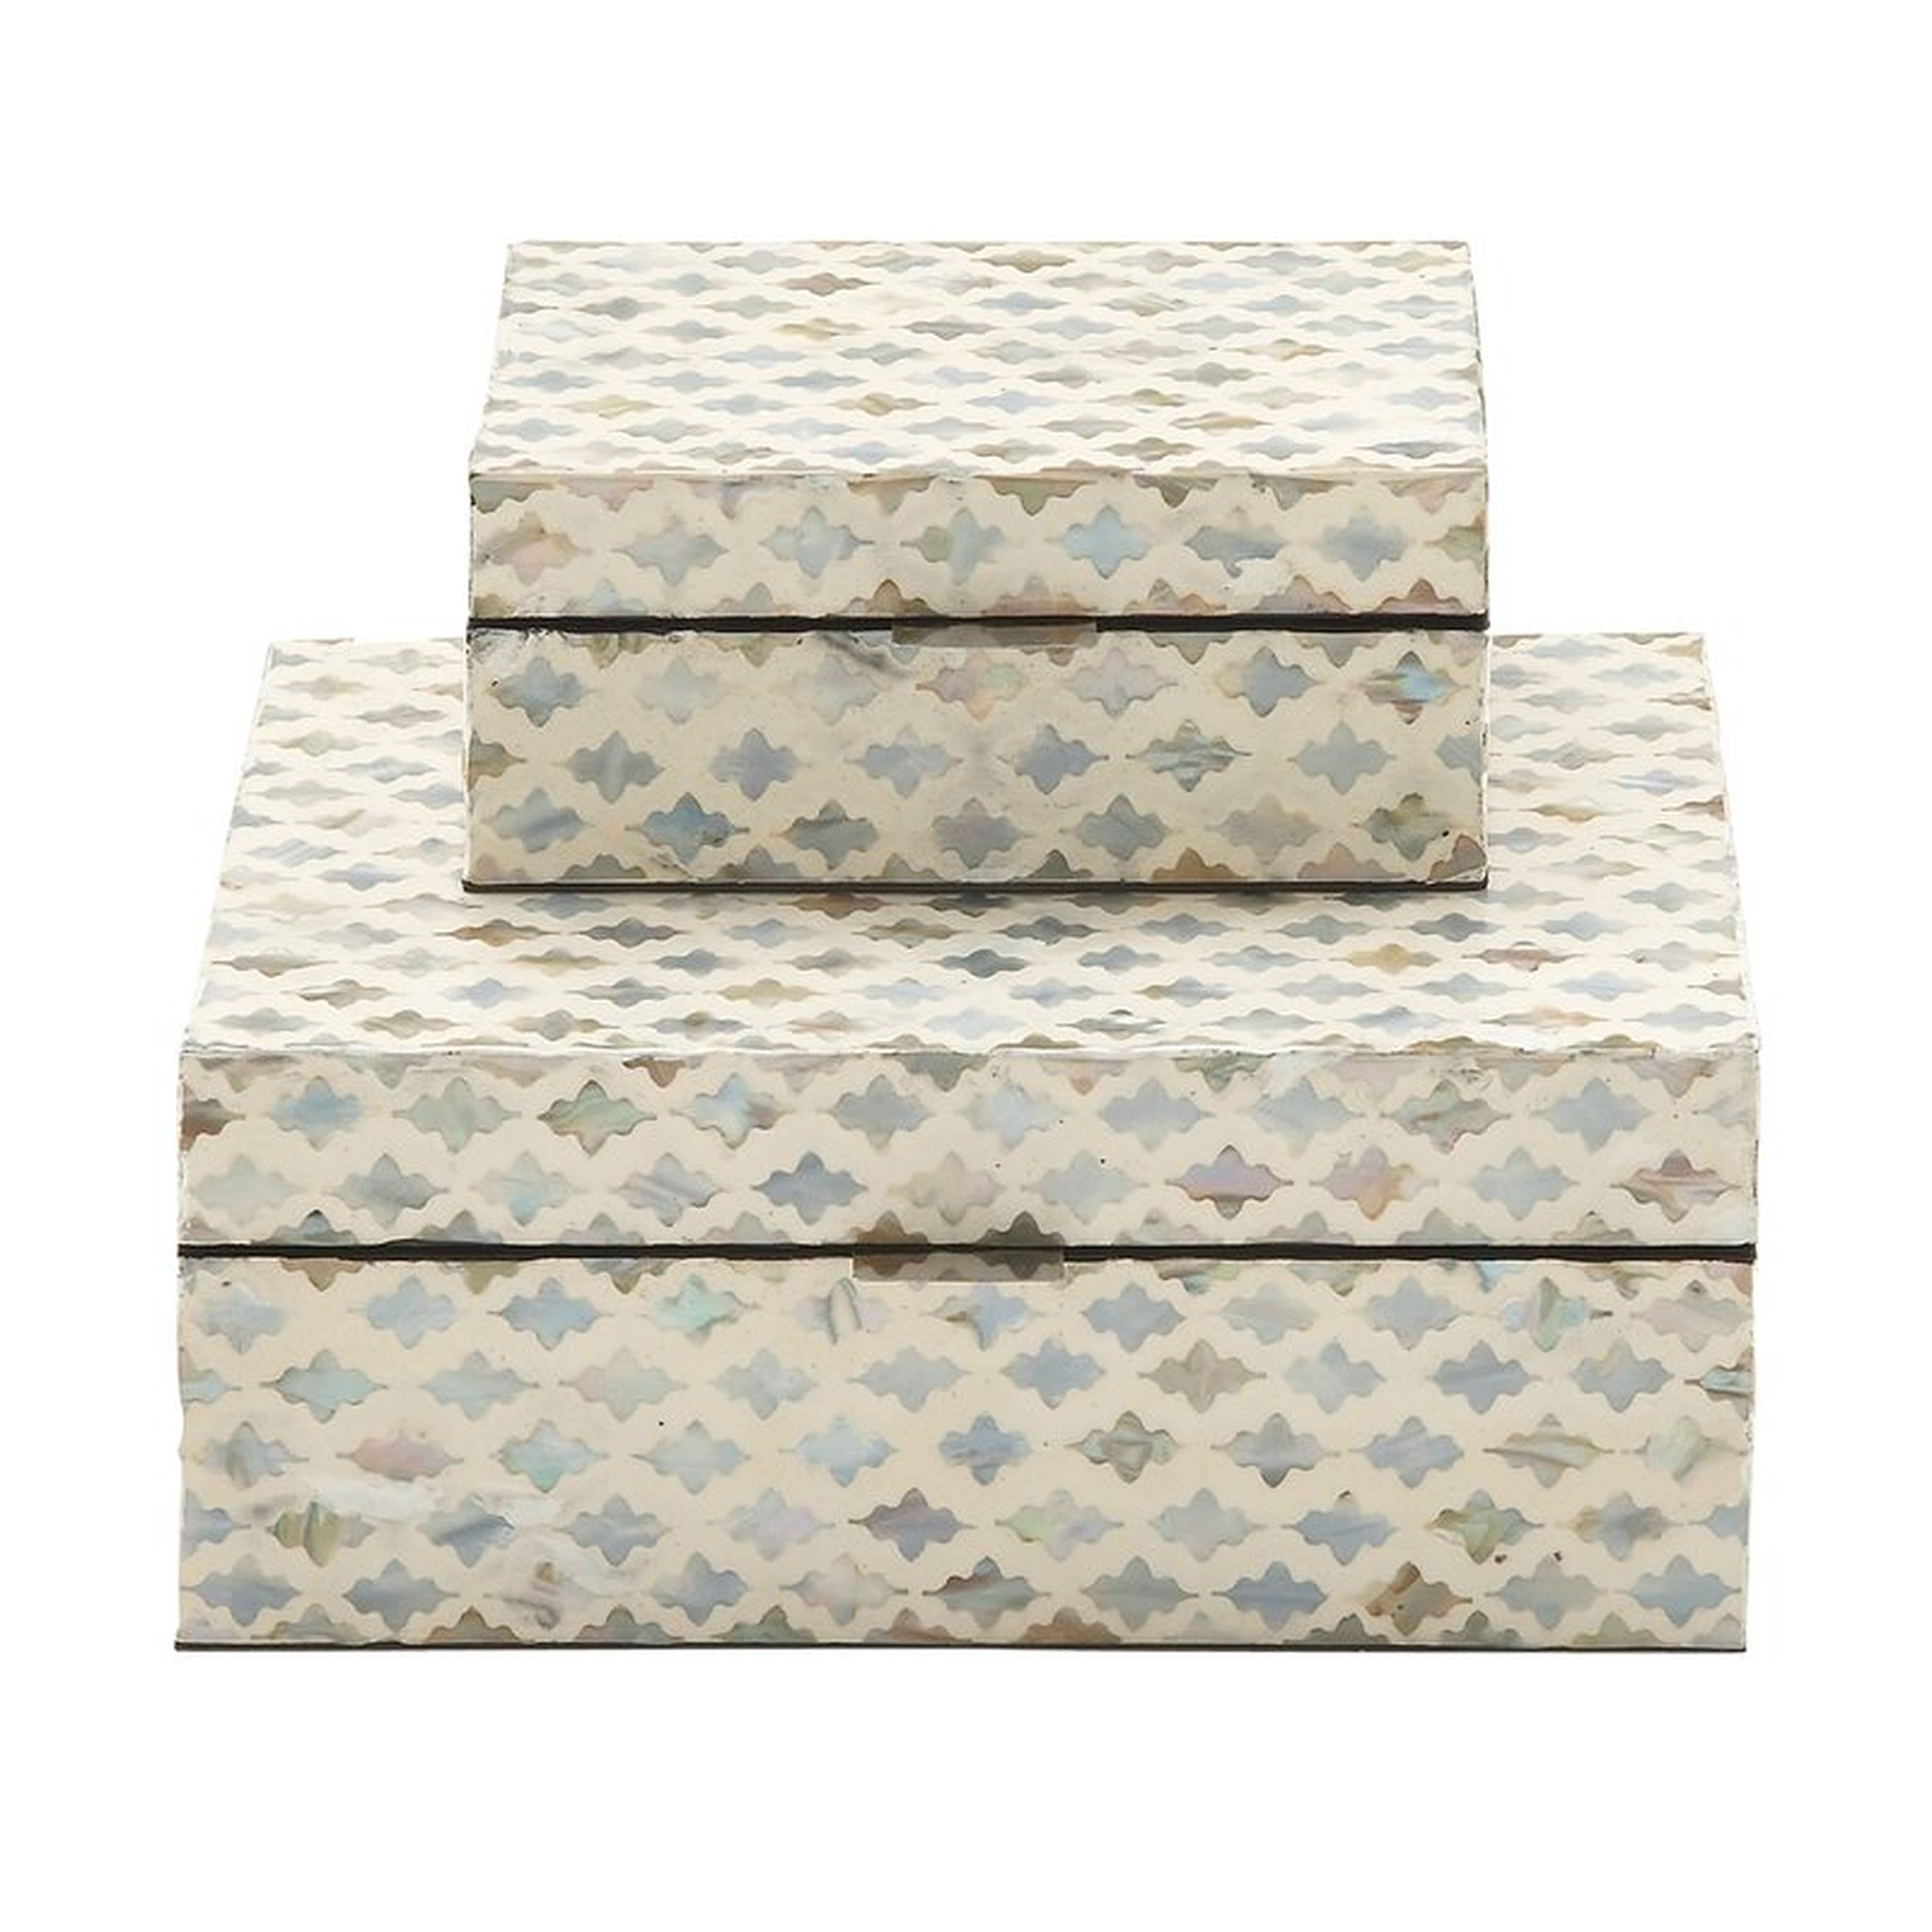 Marea 2 Piece Mother of Pearl Inlay Decorative Box Set by Dakota Fields - Wayfair